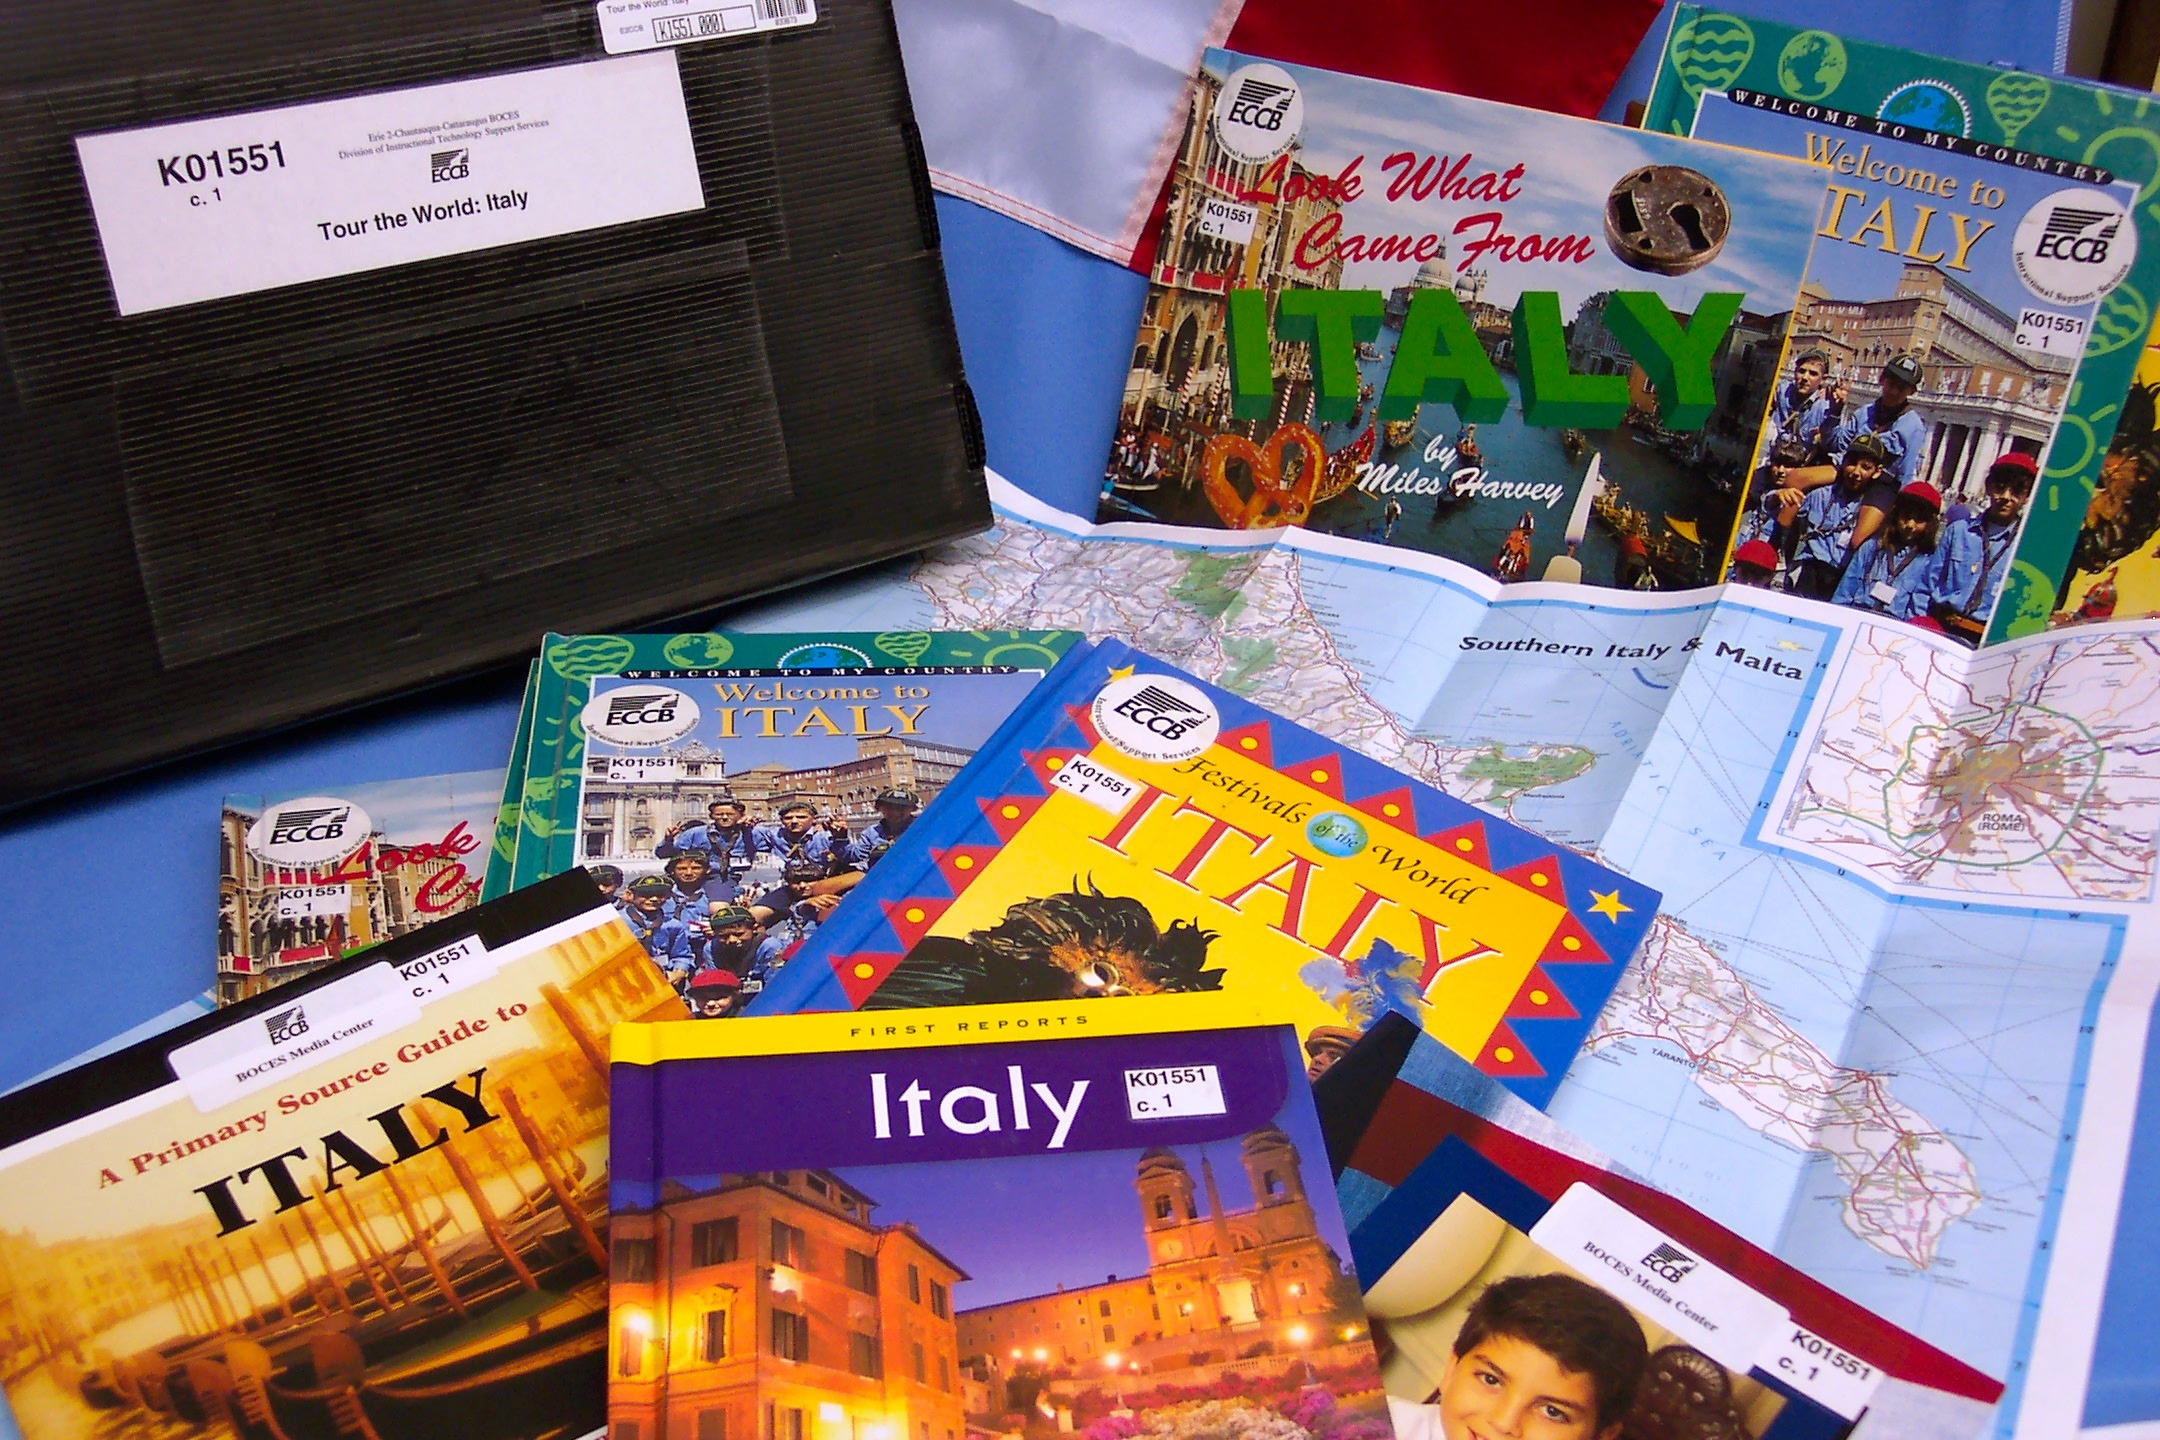 Tour the World: Italy